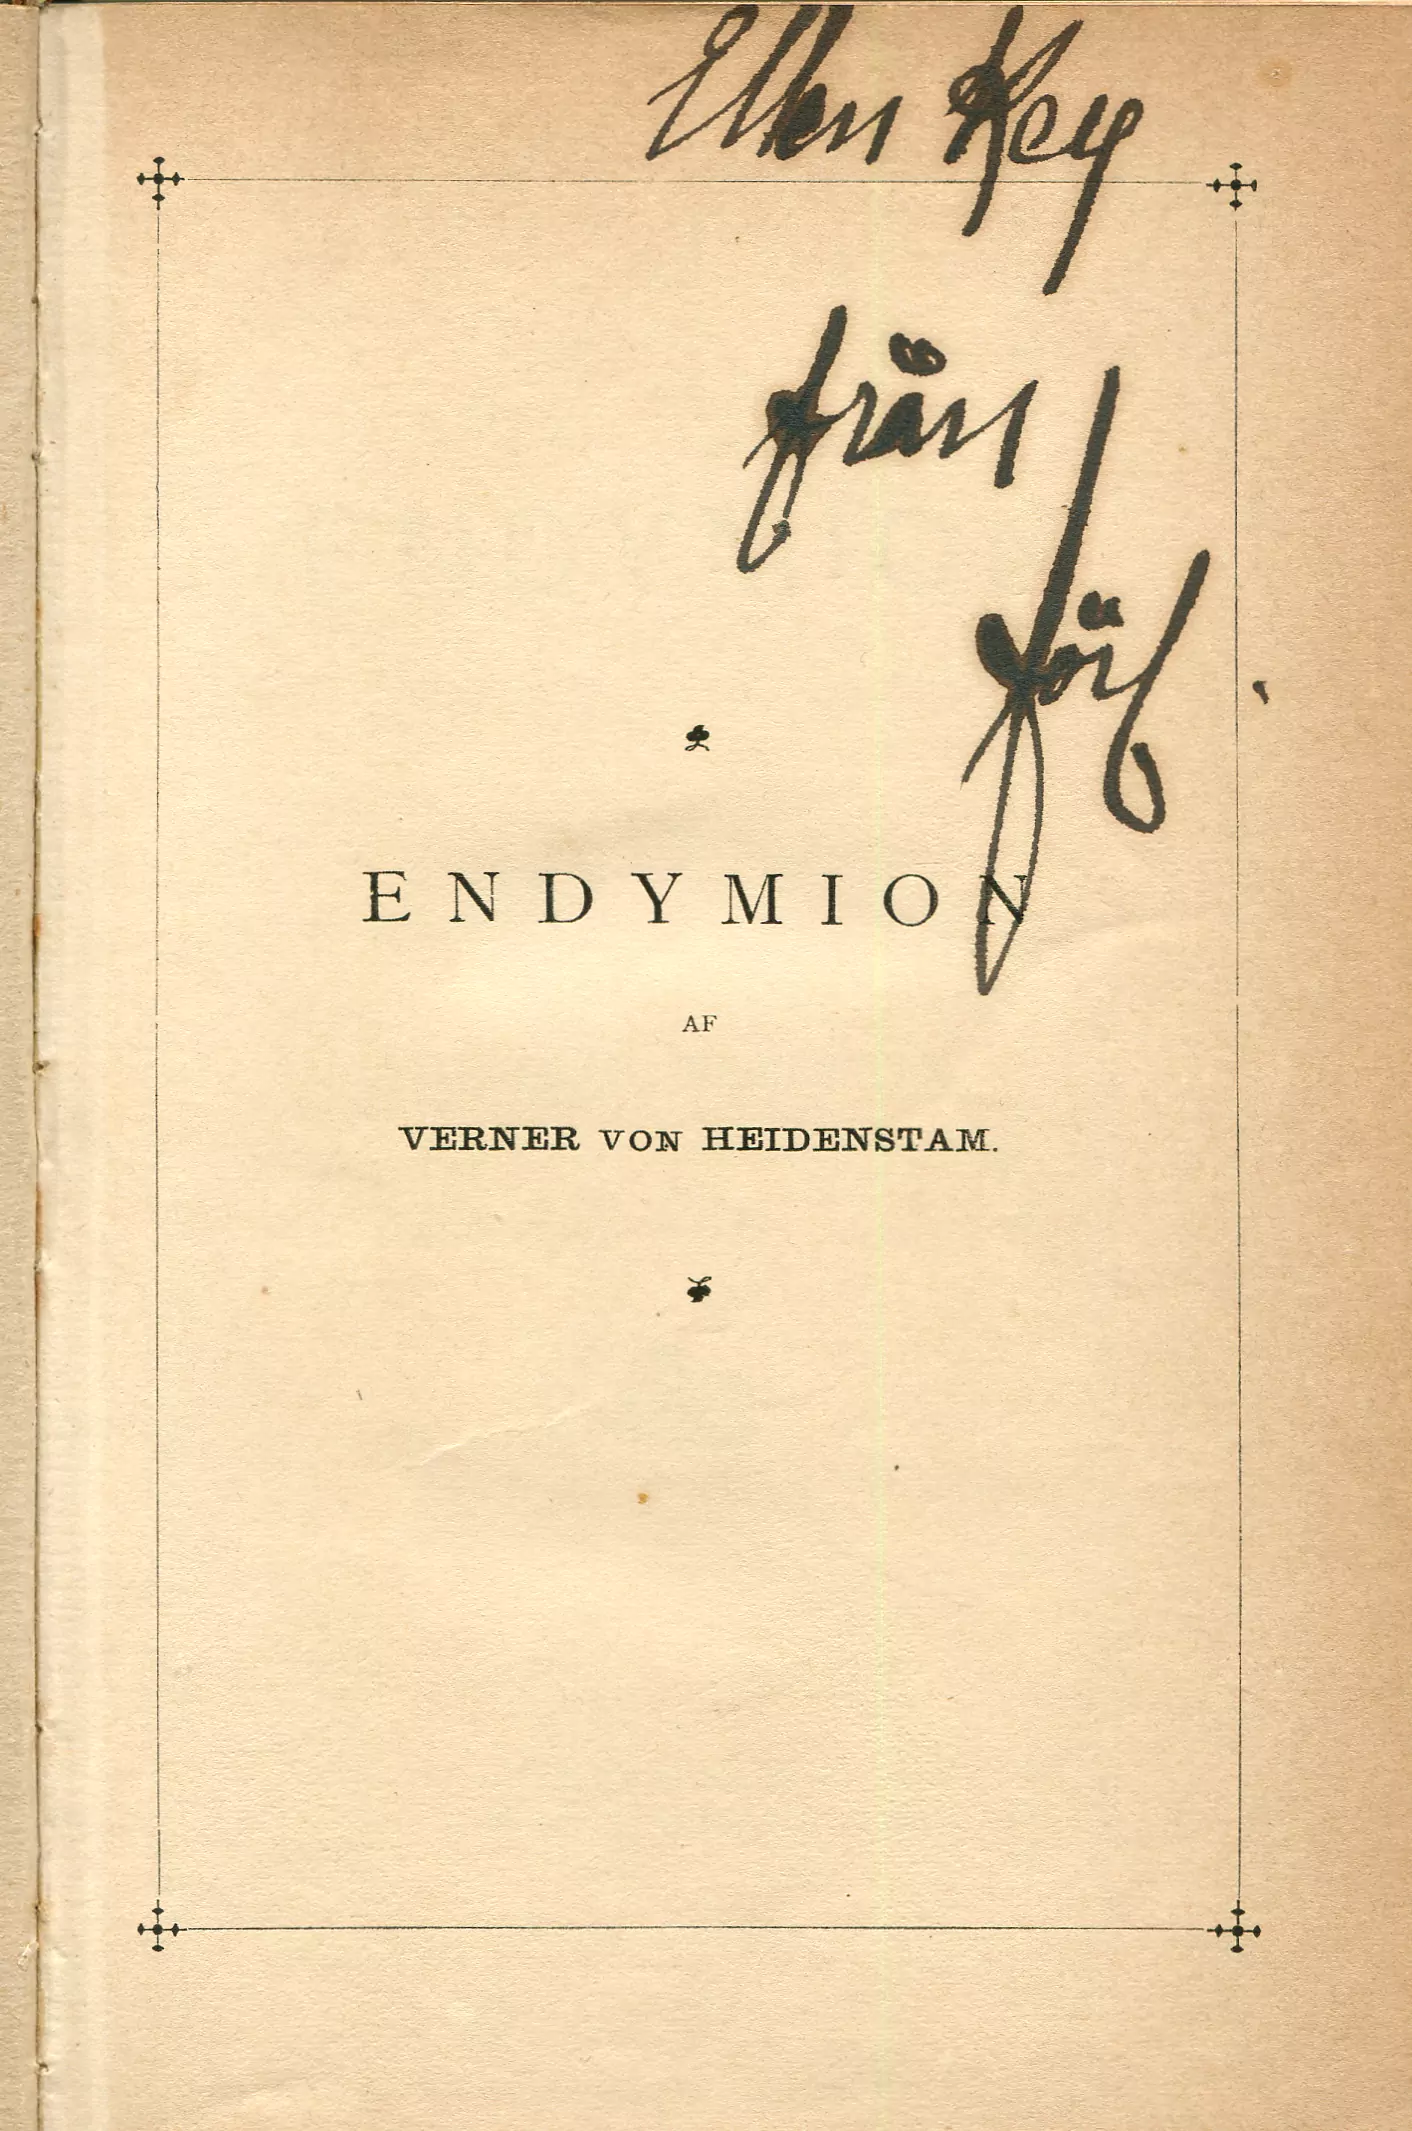 Endymion, Stockholm 1889